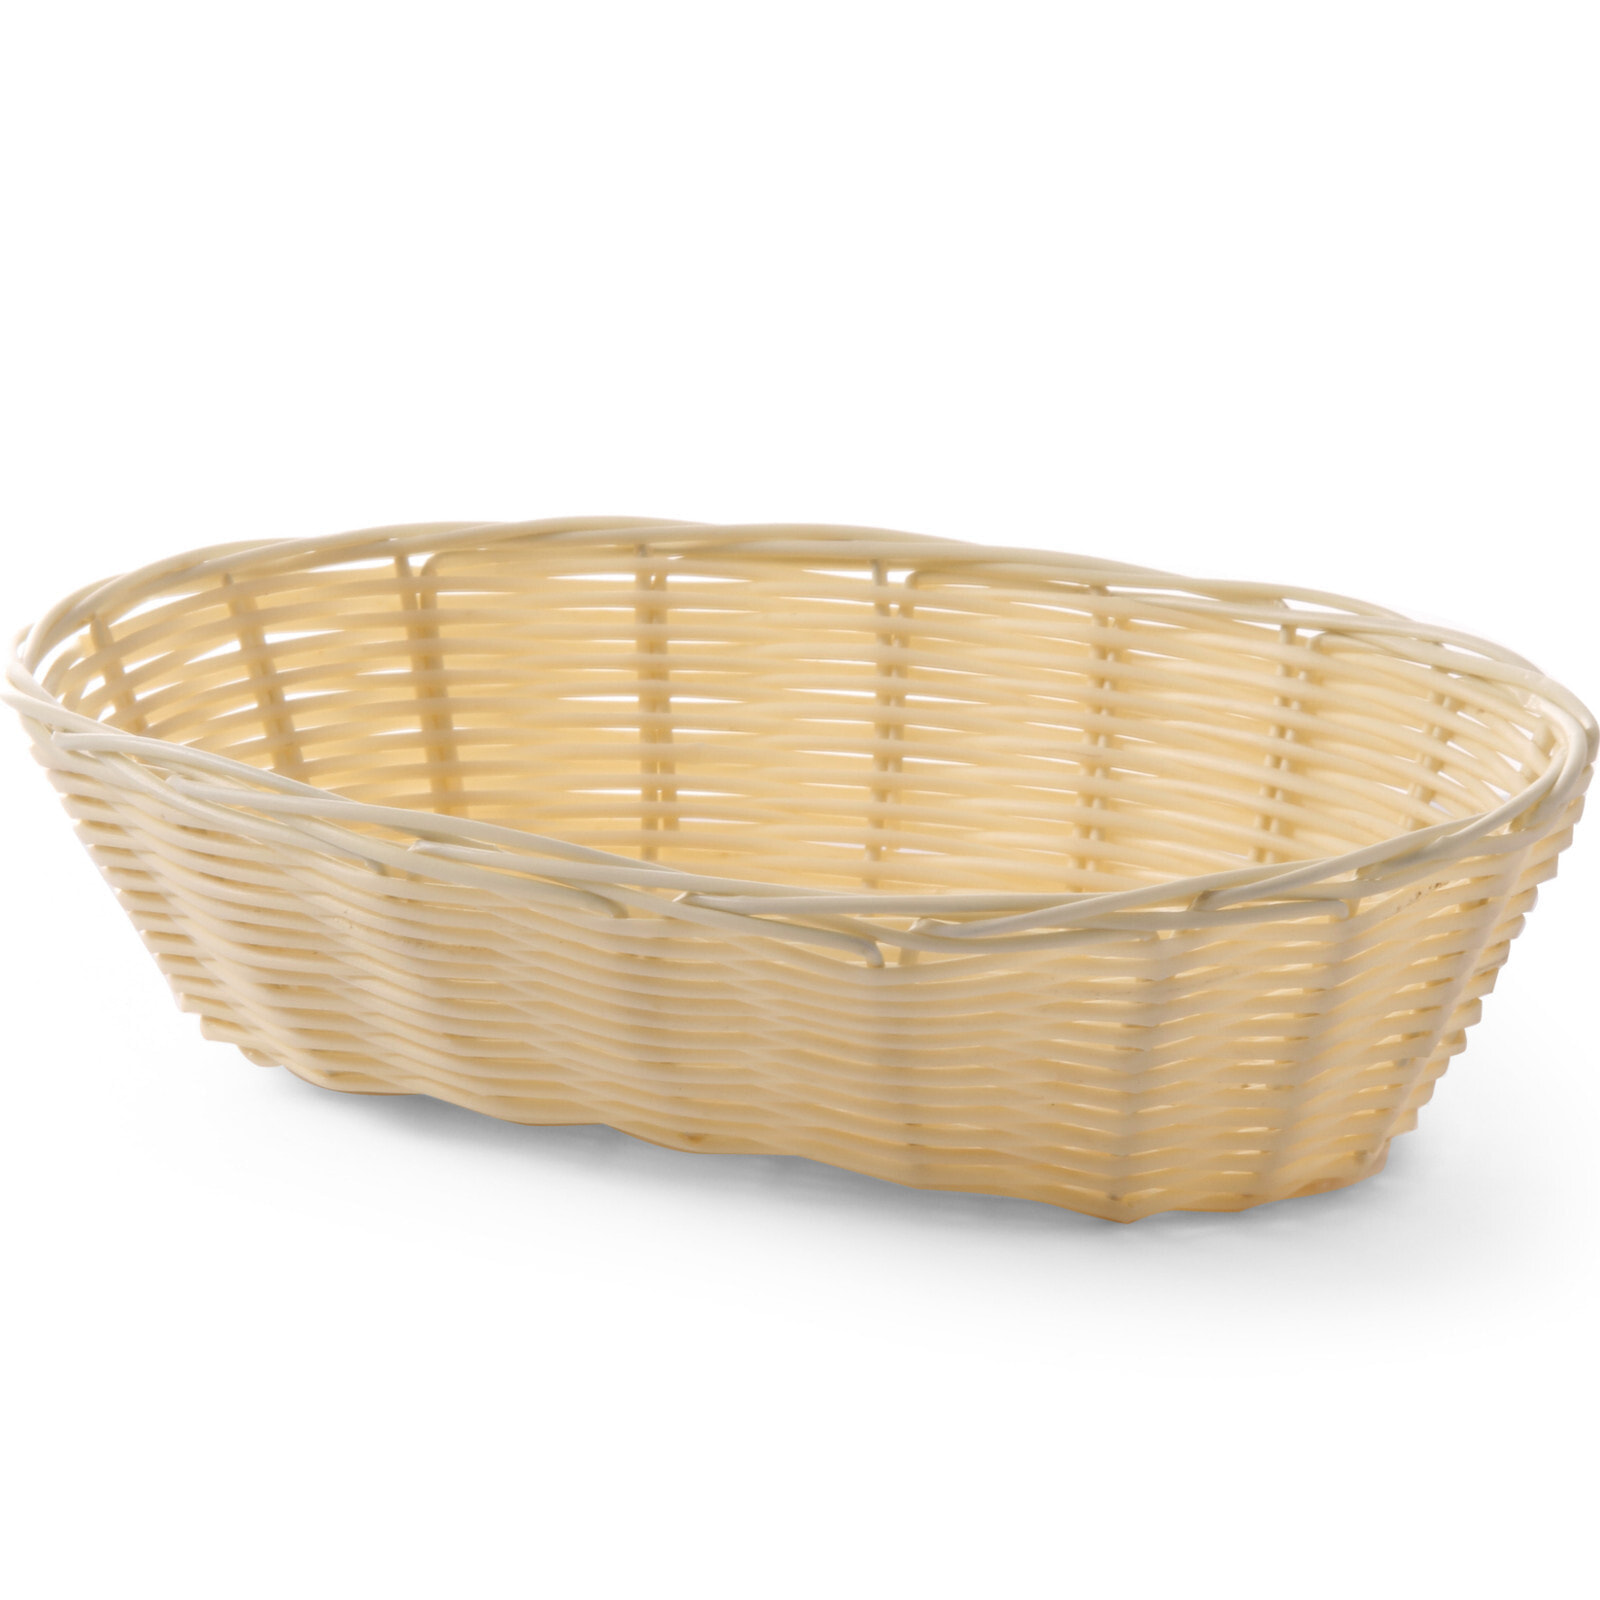 Oval poly rattan bread basket 225x130x55mm - Hendi 426500